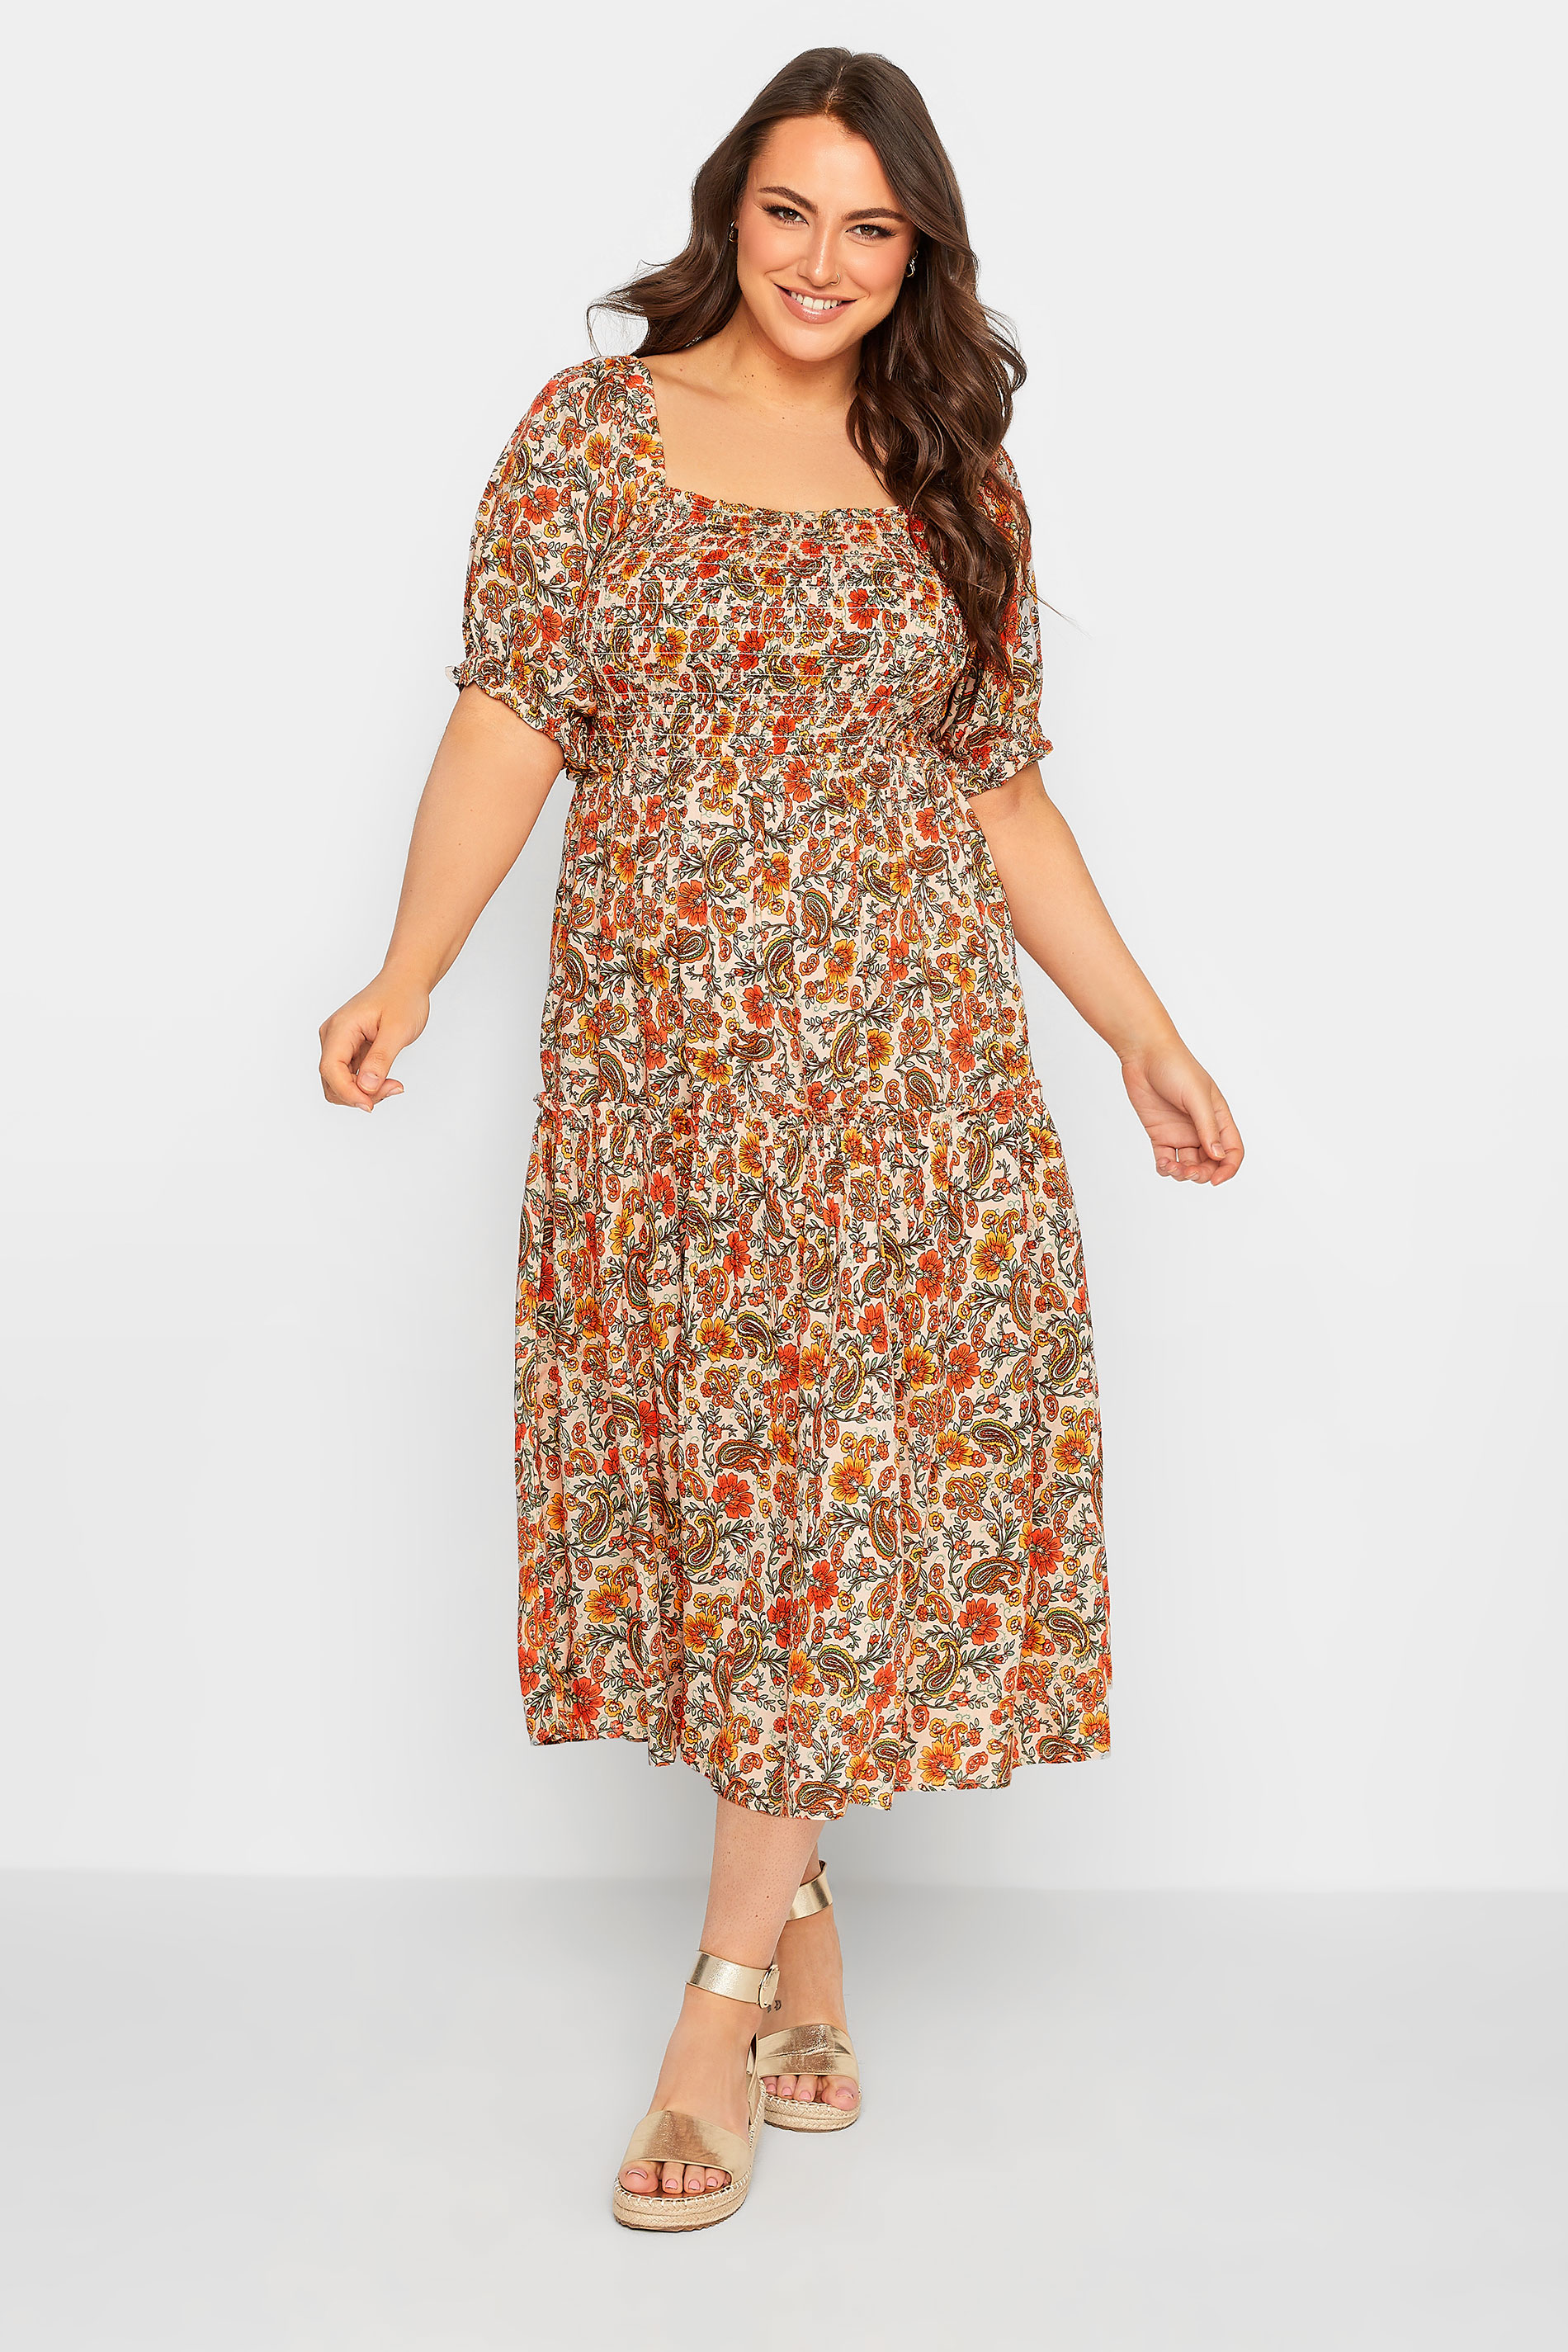 YOURS PETITE Plus Size Orange Paisley Shirred Midaxi Dress | Yours Clothing 1